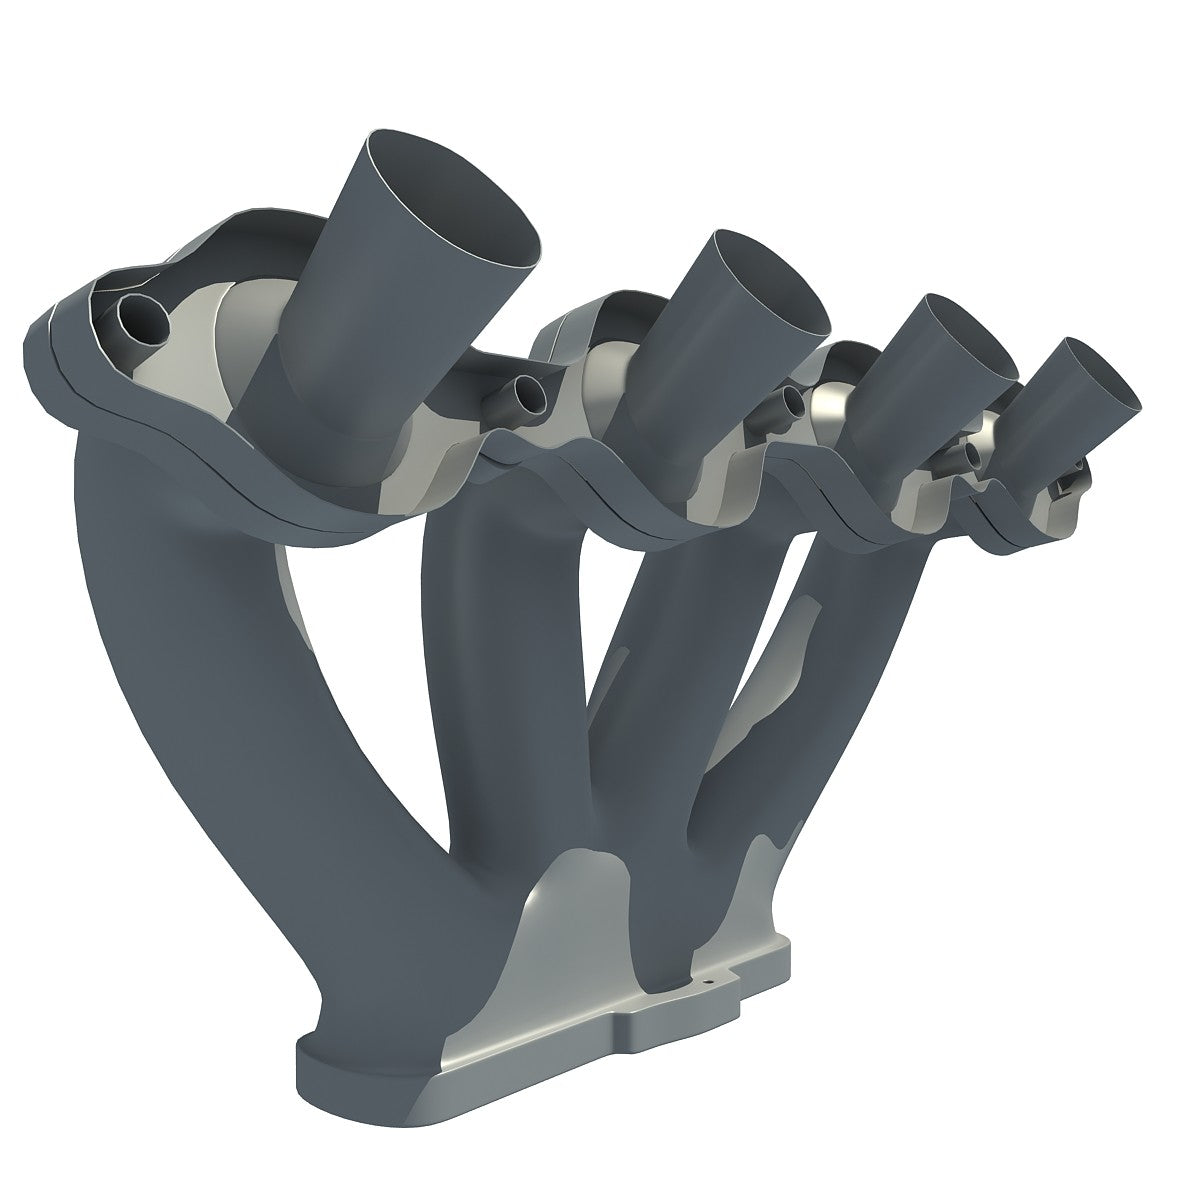 Exhaust Manifolds 3D Model